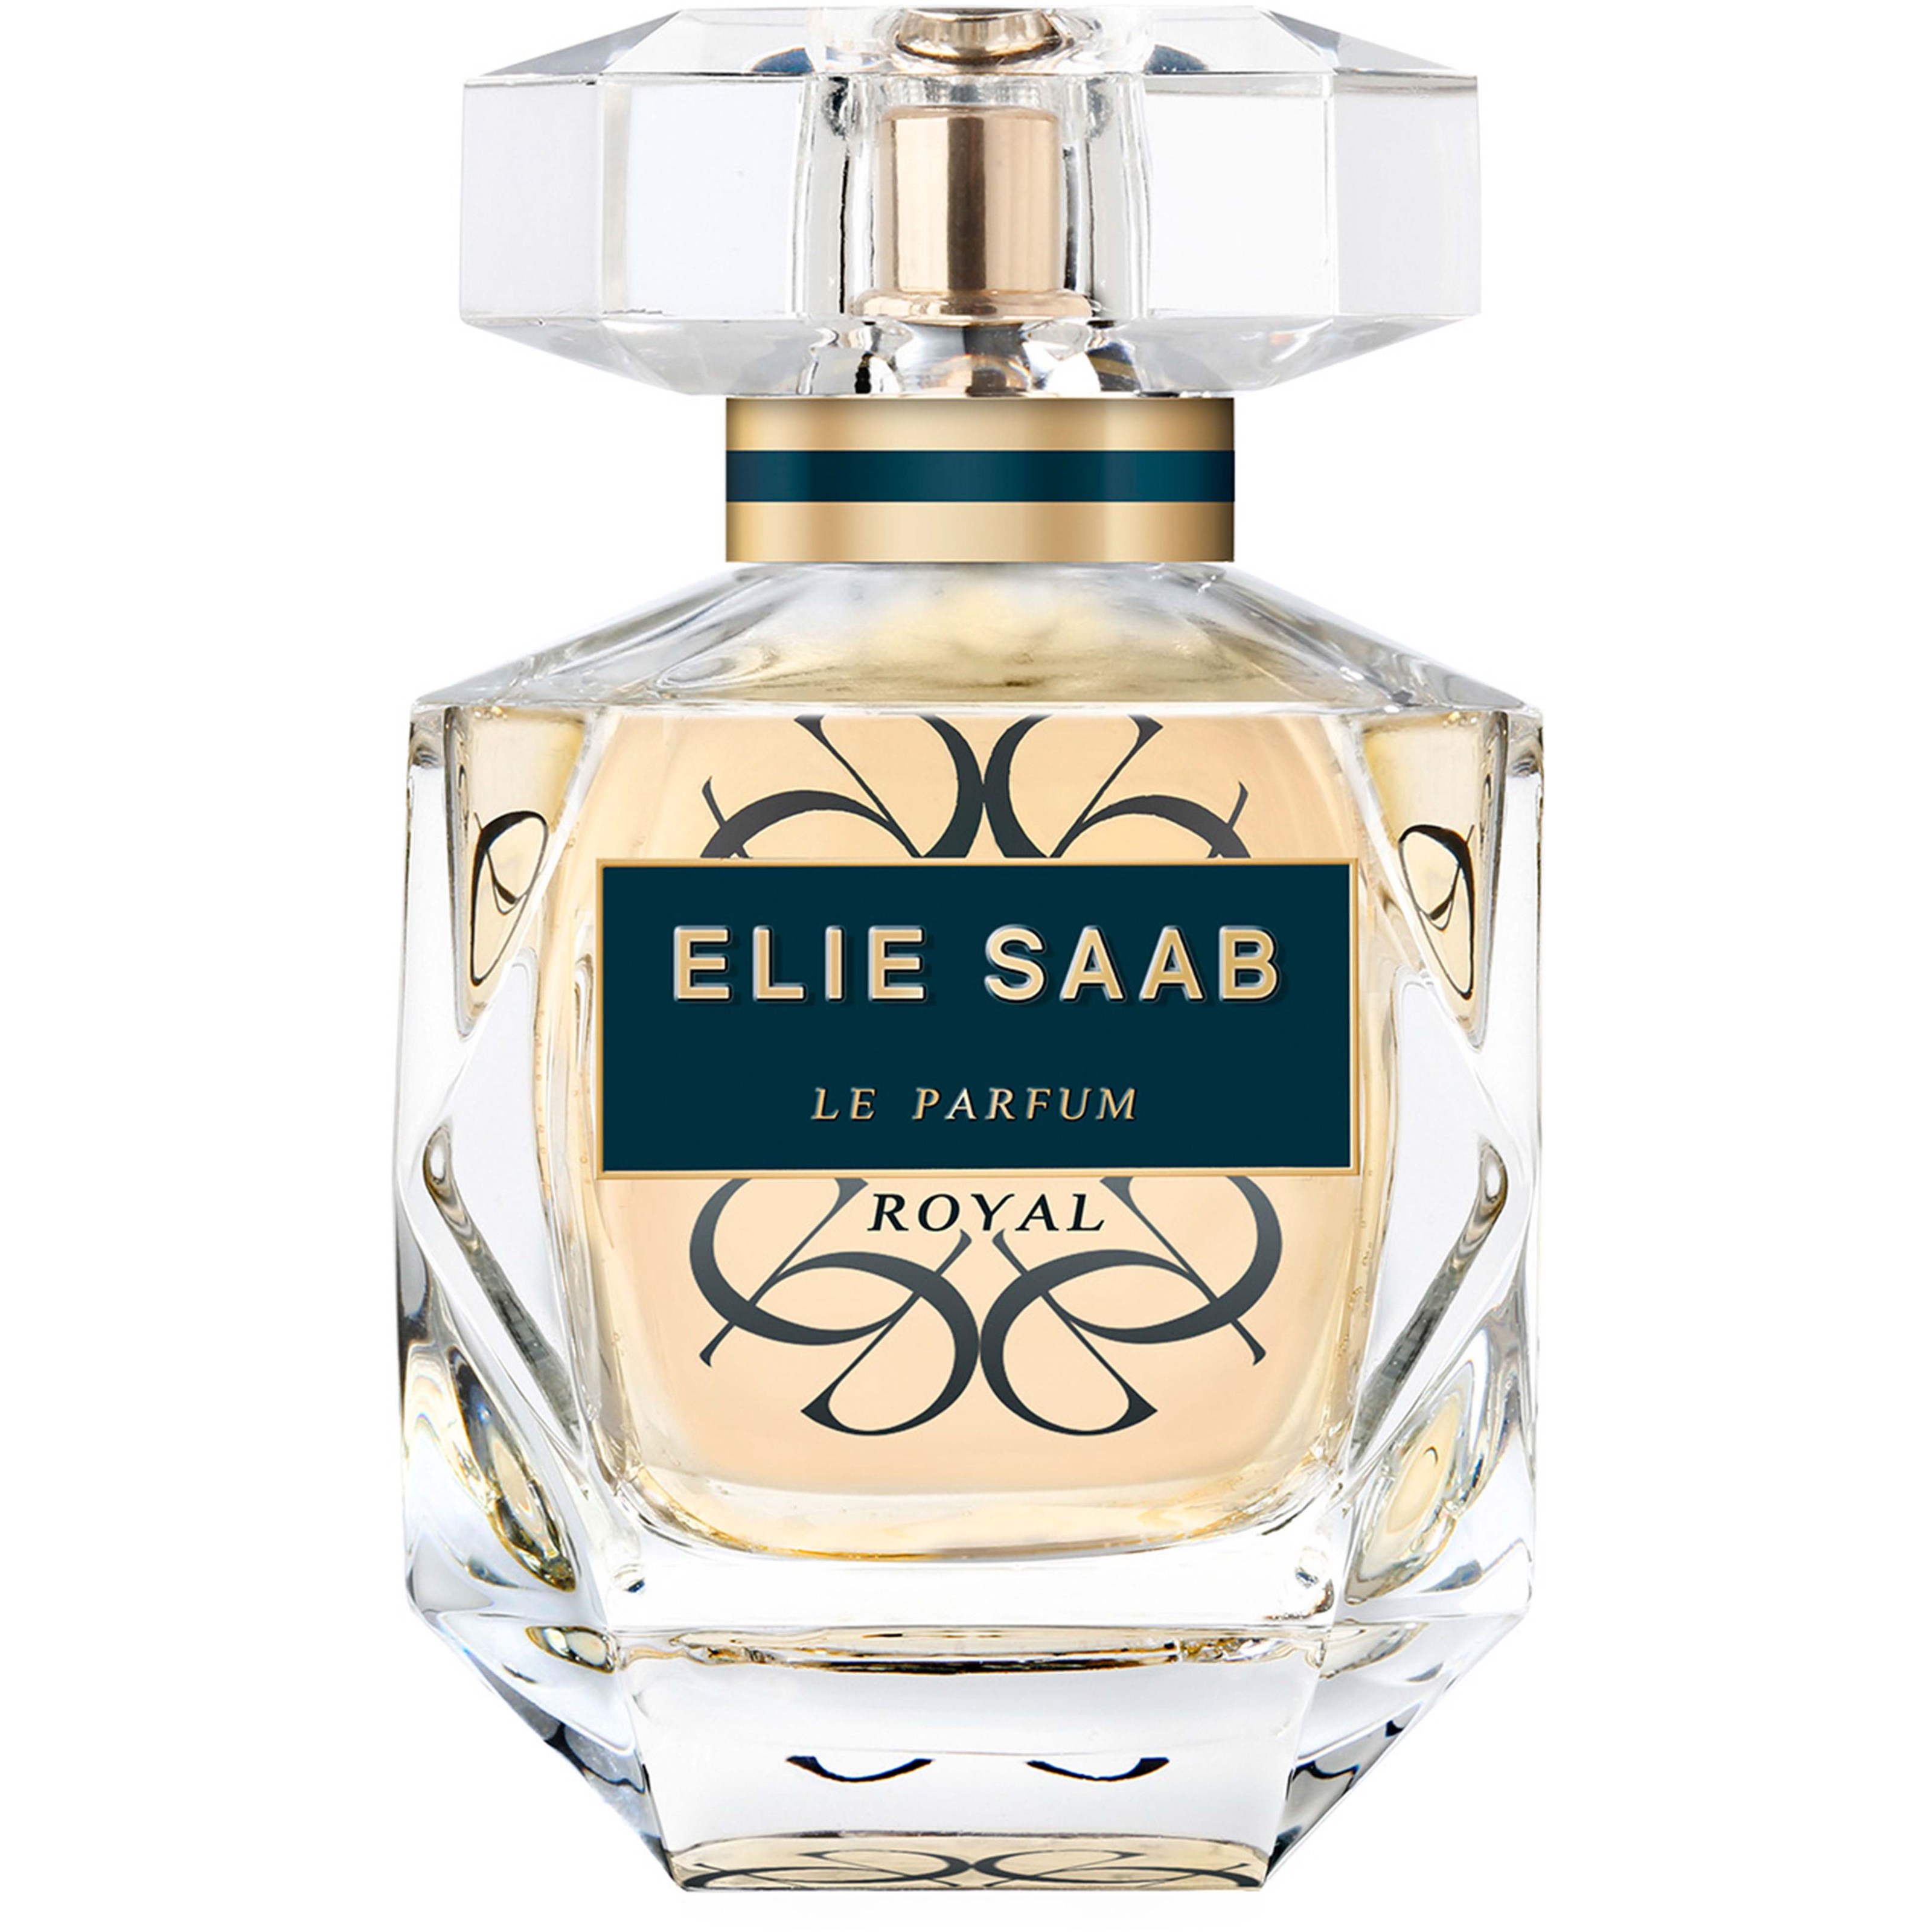 Zdjęcia - Perfuma damska Elie Saab Le Parfum Royal Eau de Parfum 50 ml 